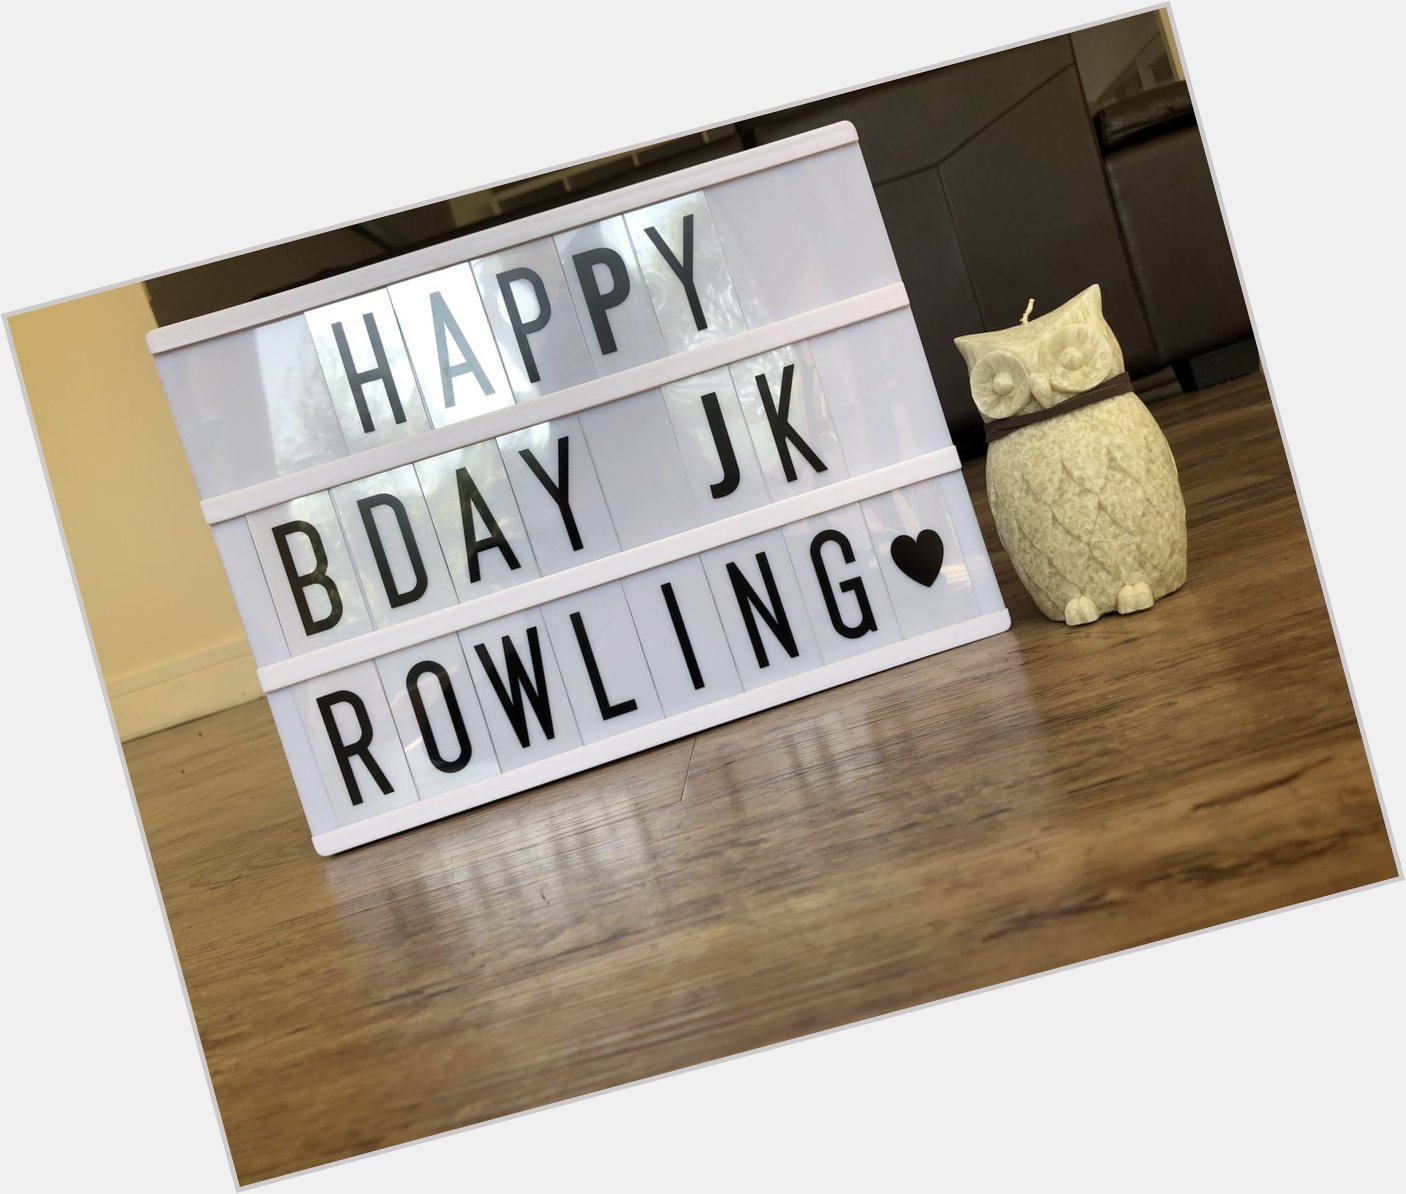 Celebrating J.K Rowling and Harry Potter s birthday. Many happy returns 